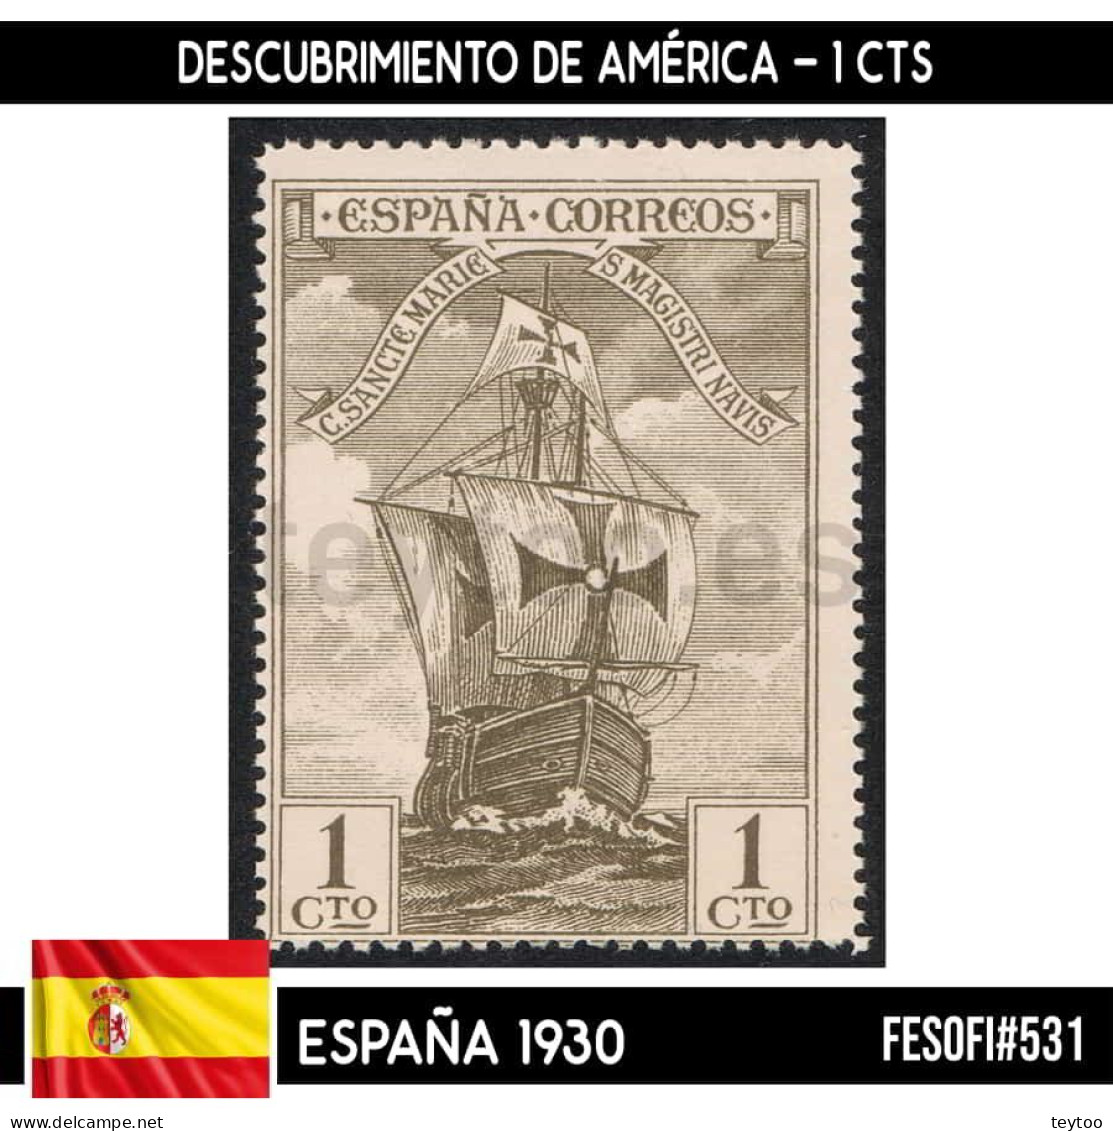 D0258# España 1930. Descubrimiento De América, 1 Cts (MNH) FES#531 - Nuevos